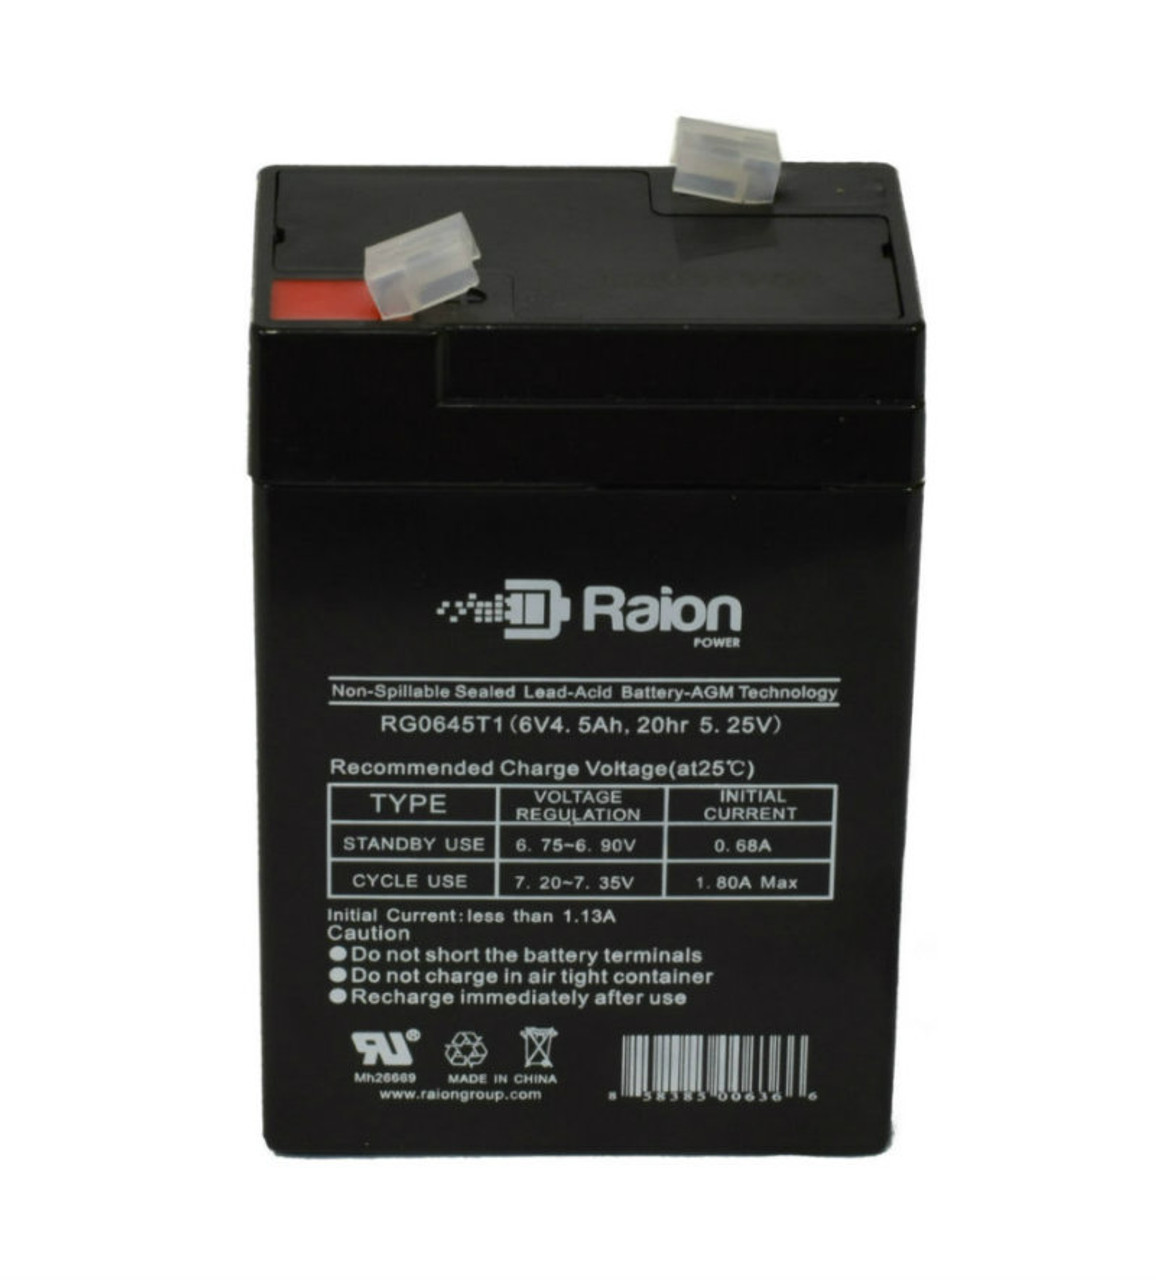 Raion Power RG0645T1 Replacement Battery Cartridge for Sonnenschein A506/4.0S